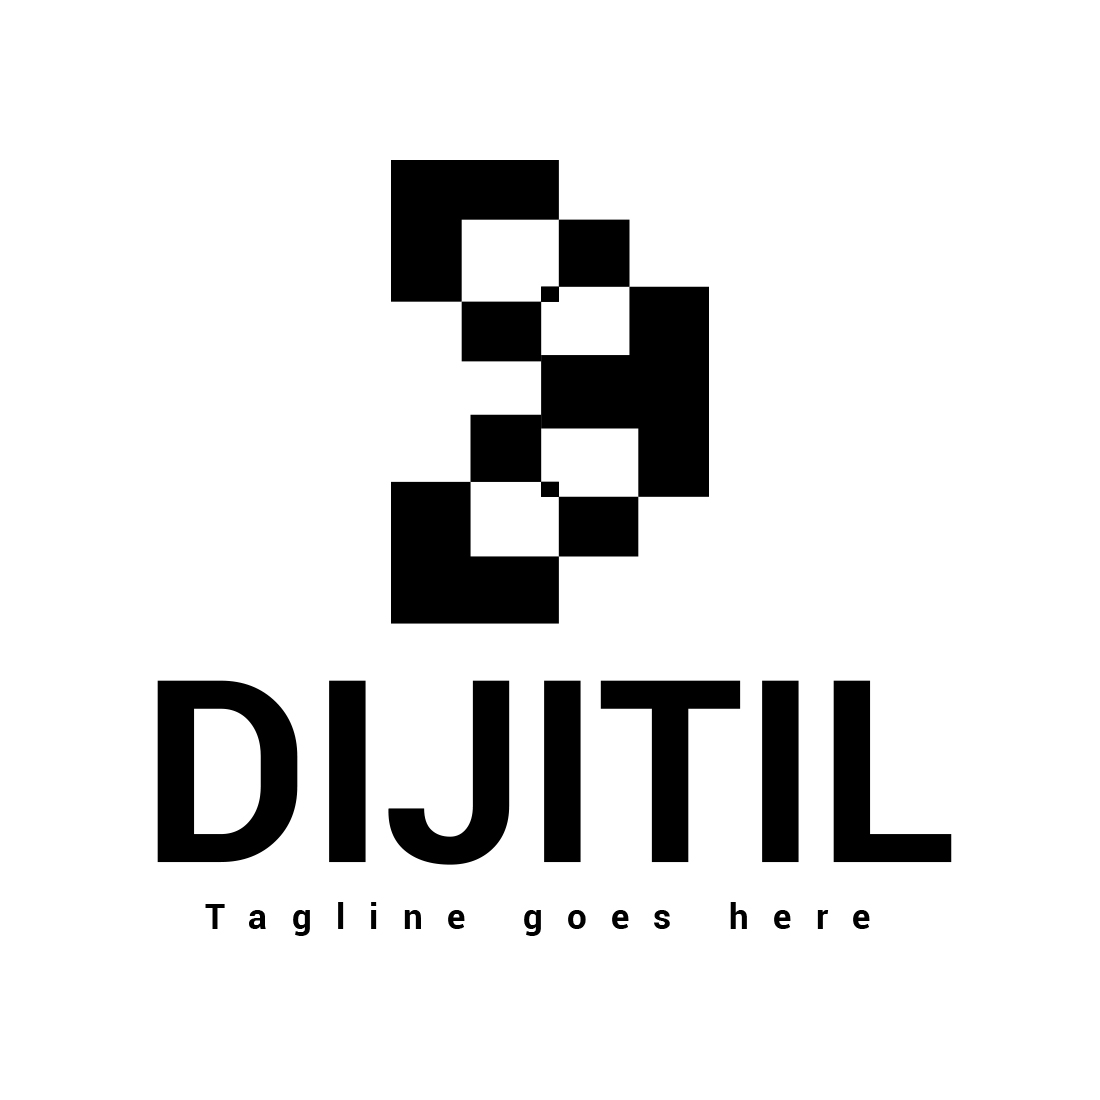 Letter D logo design preview image.